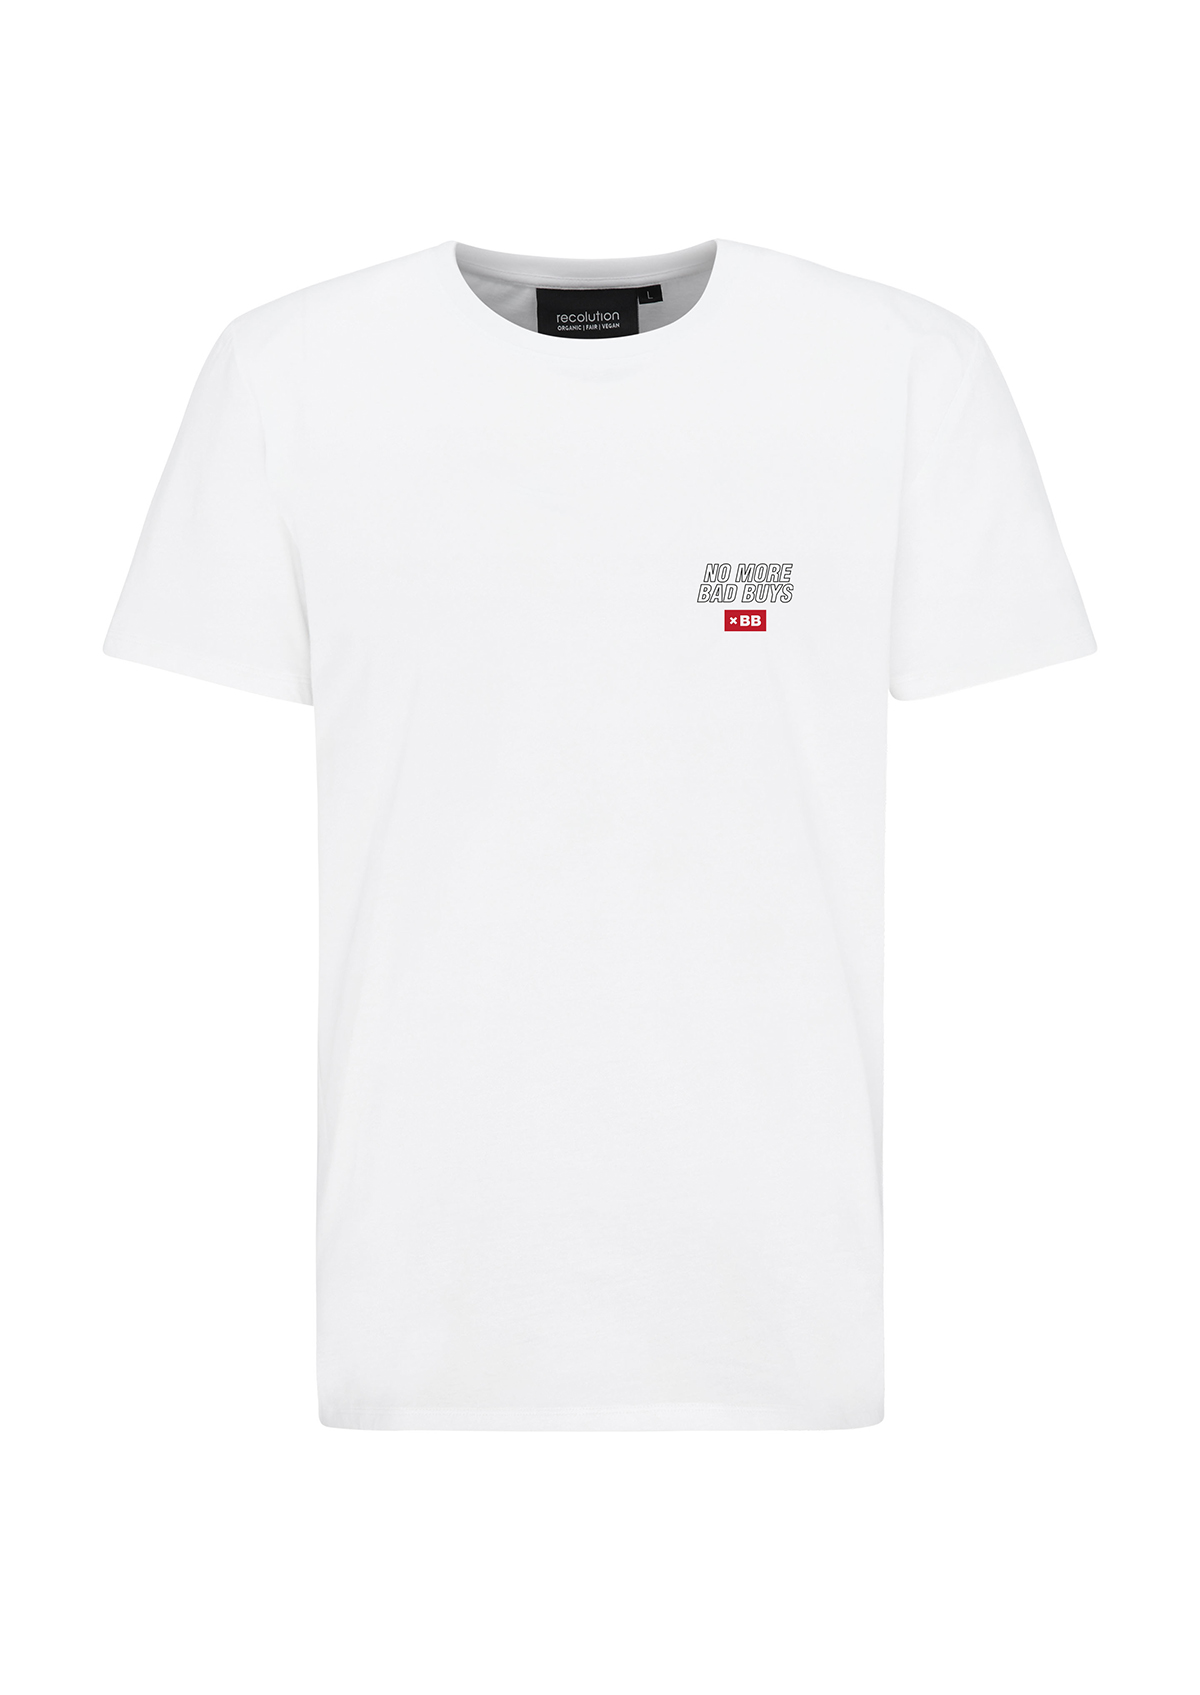 Unisex T-Shirt #NOBADBUYS